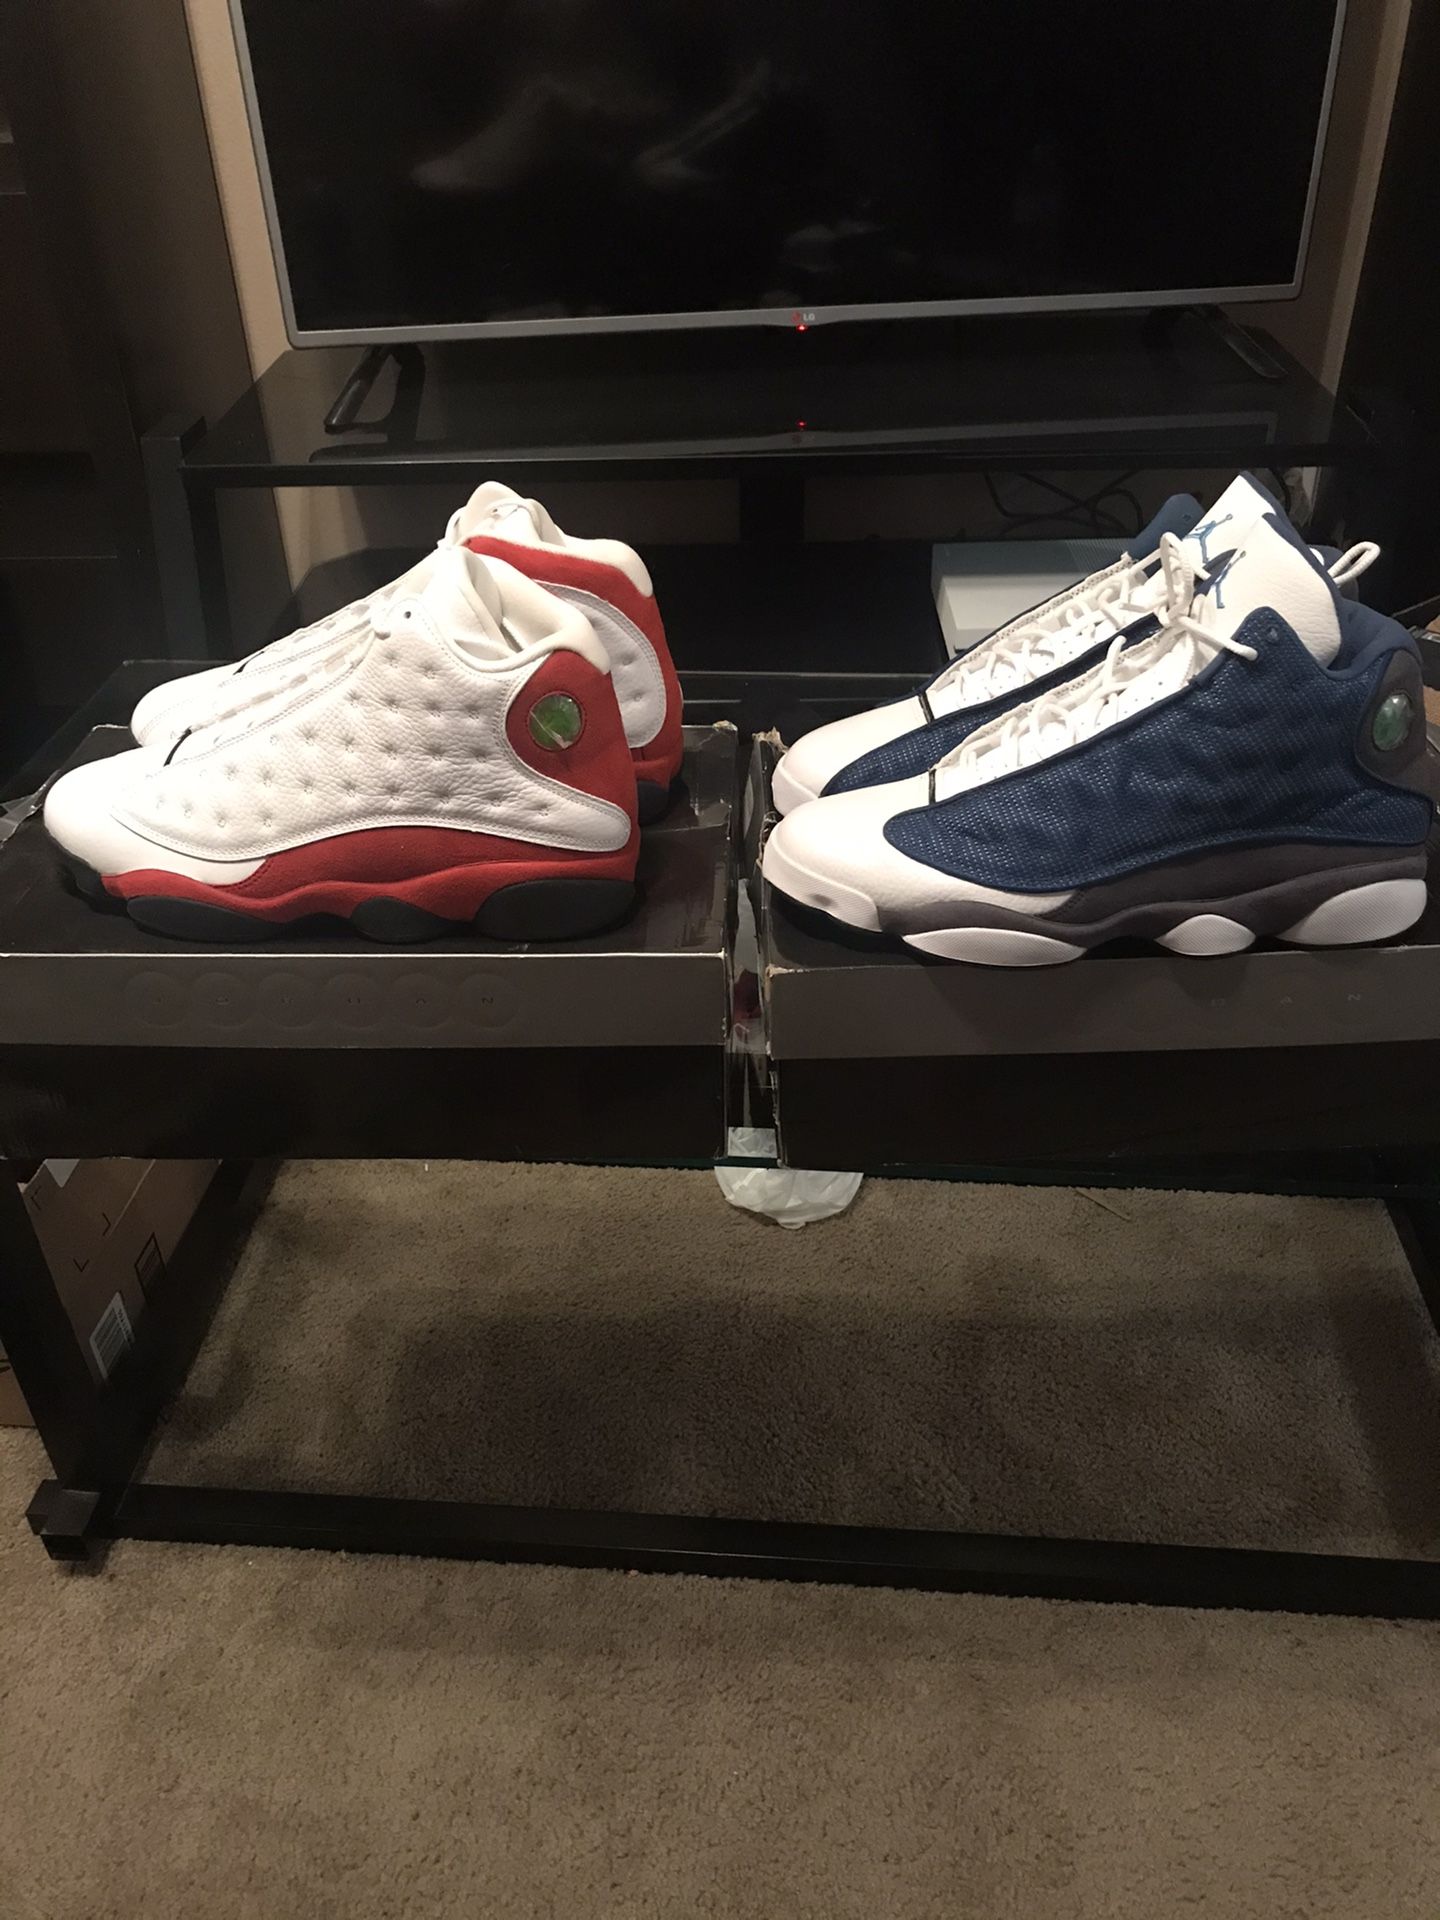 Jordan 13 2 pairs